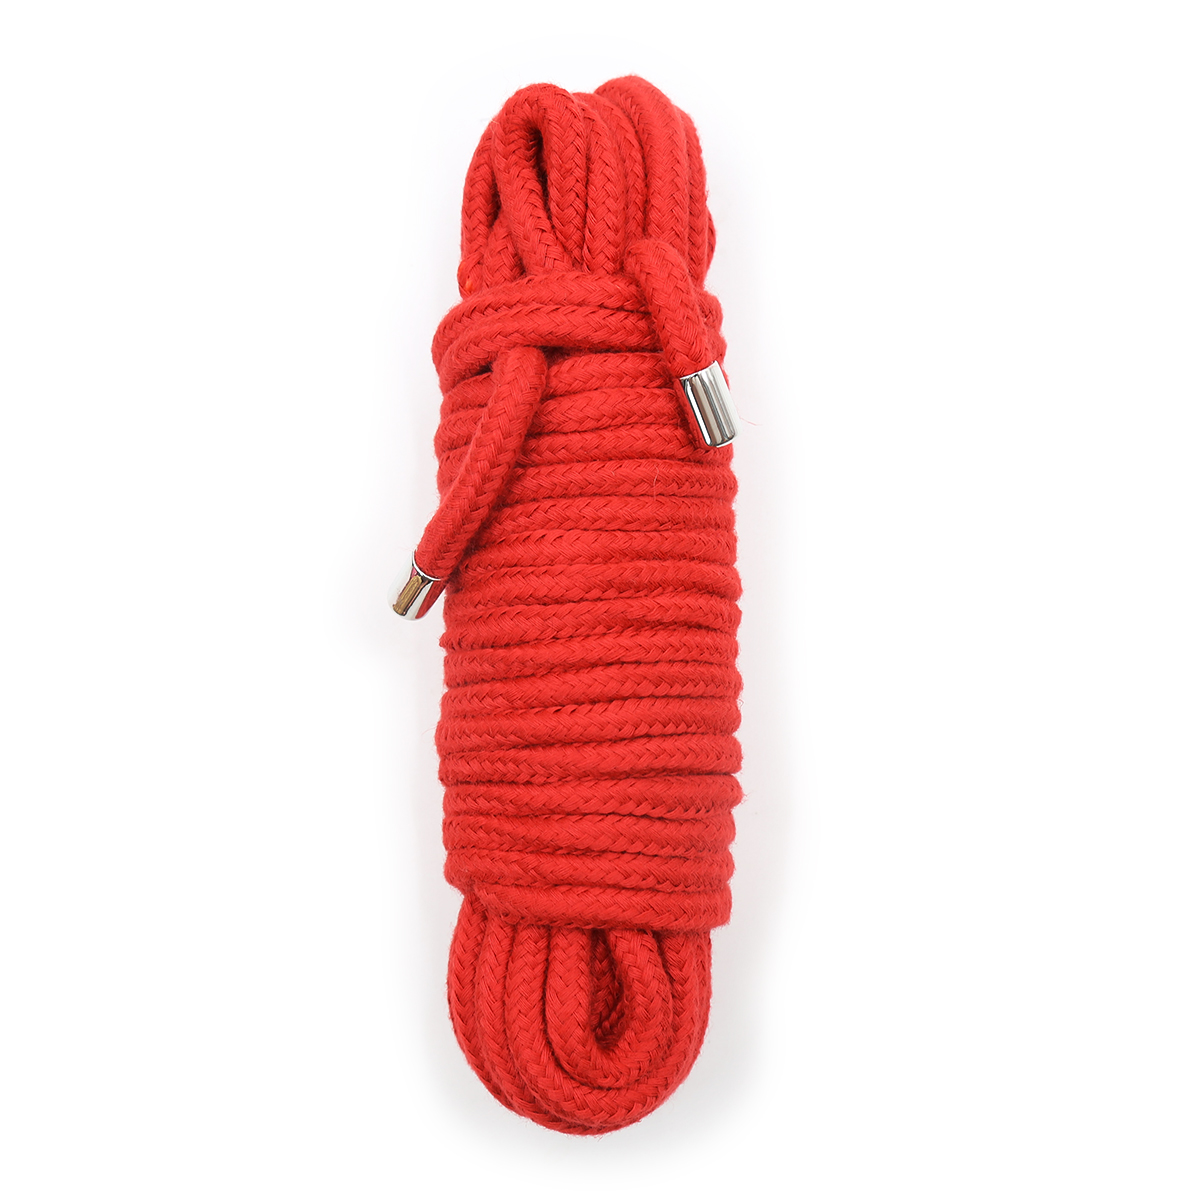 20-Meter-BDSM-Cotton-Rope-Red-OPR-321049-1